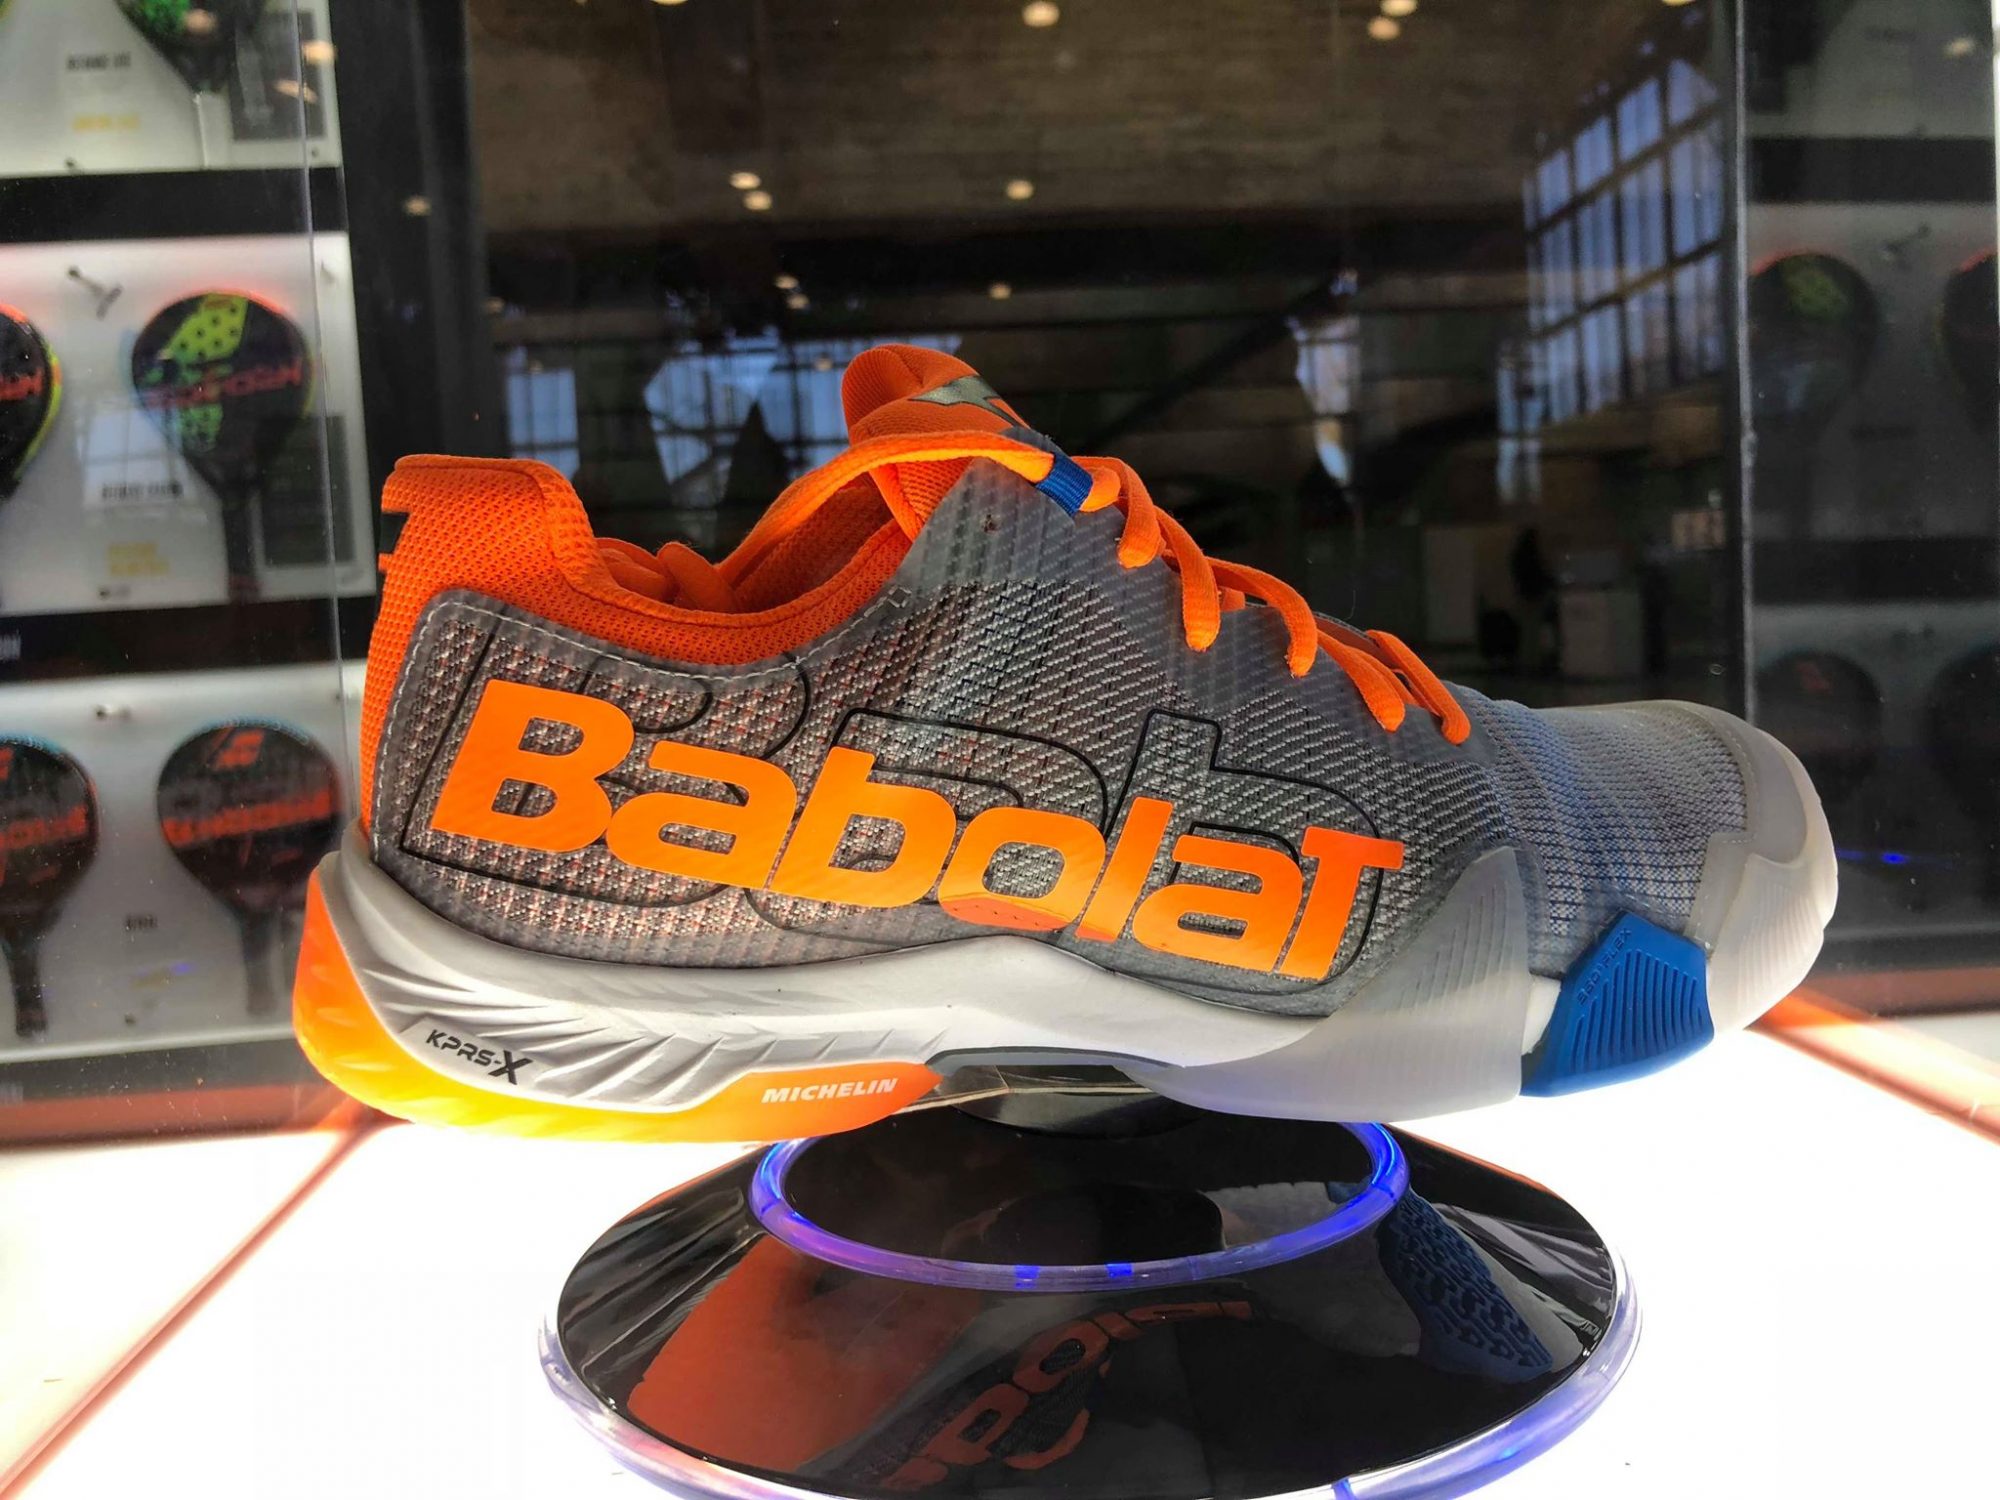 Les sabates noves Babolat jet 2019